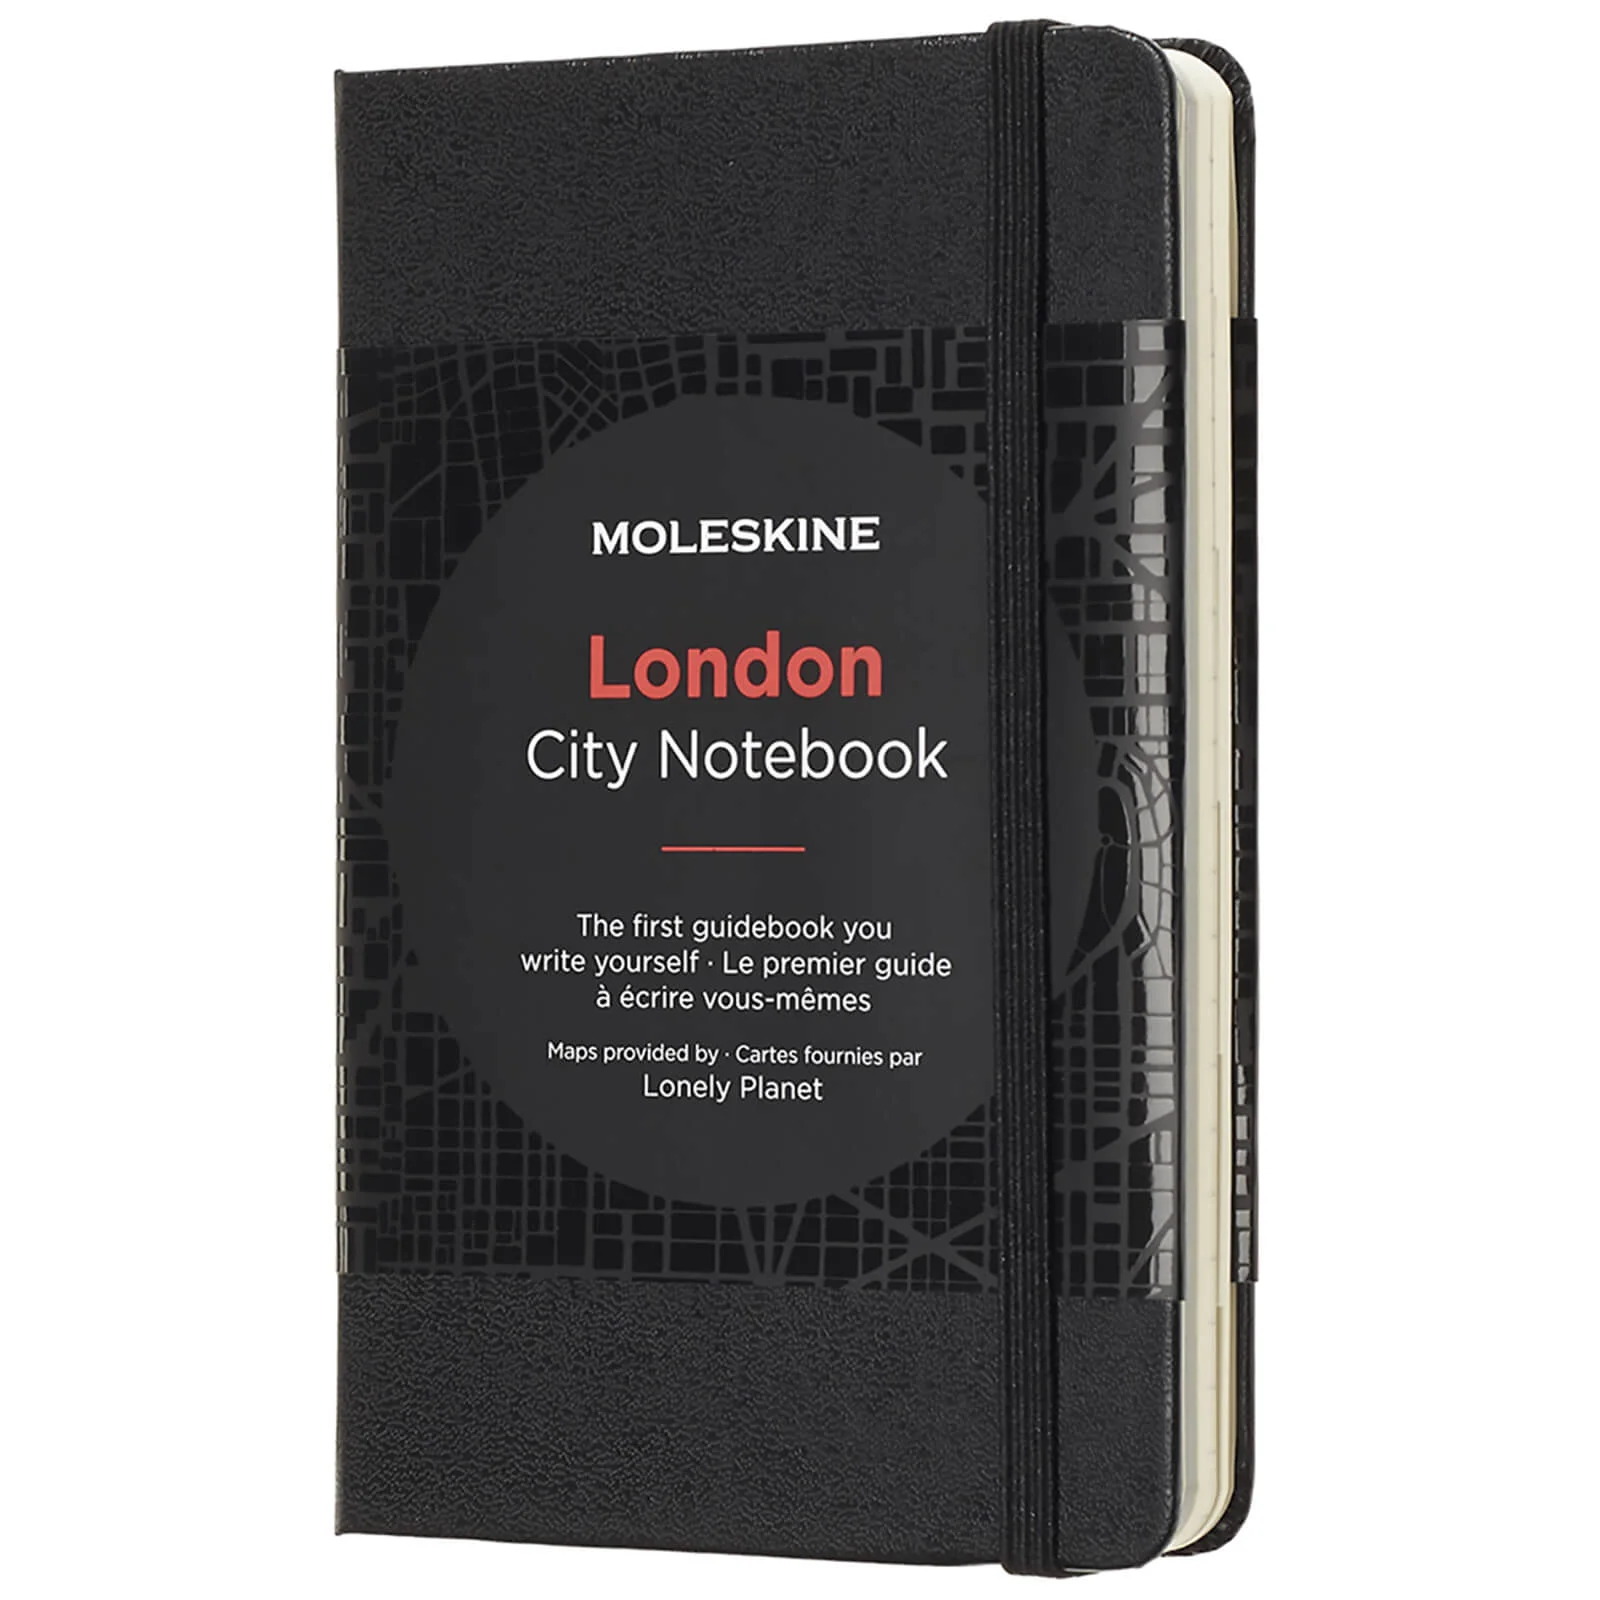 Moleskine City Notebook - London Image 1